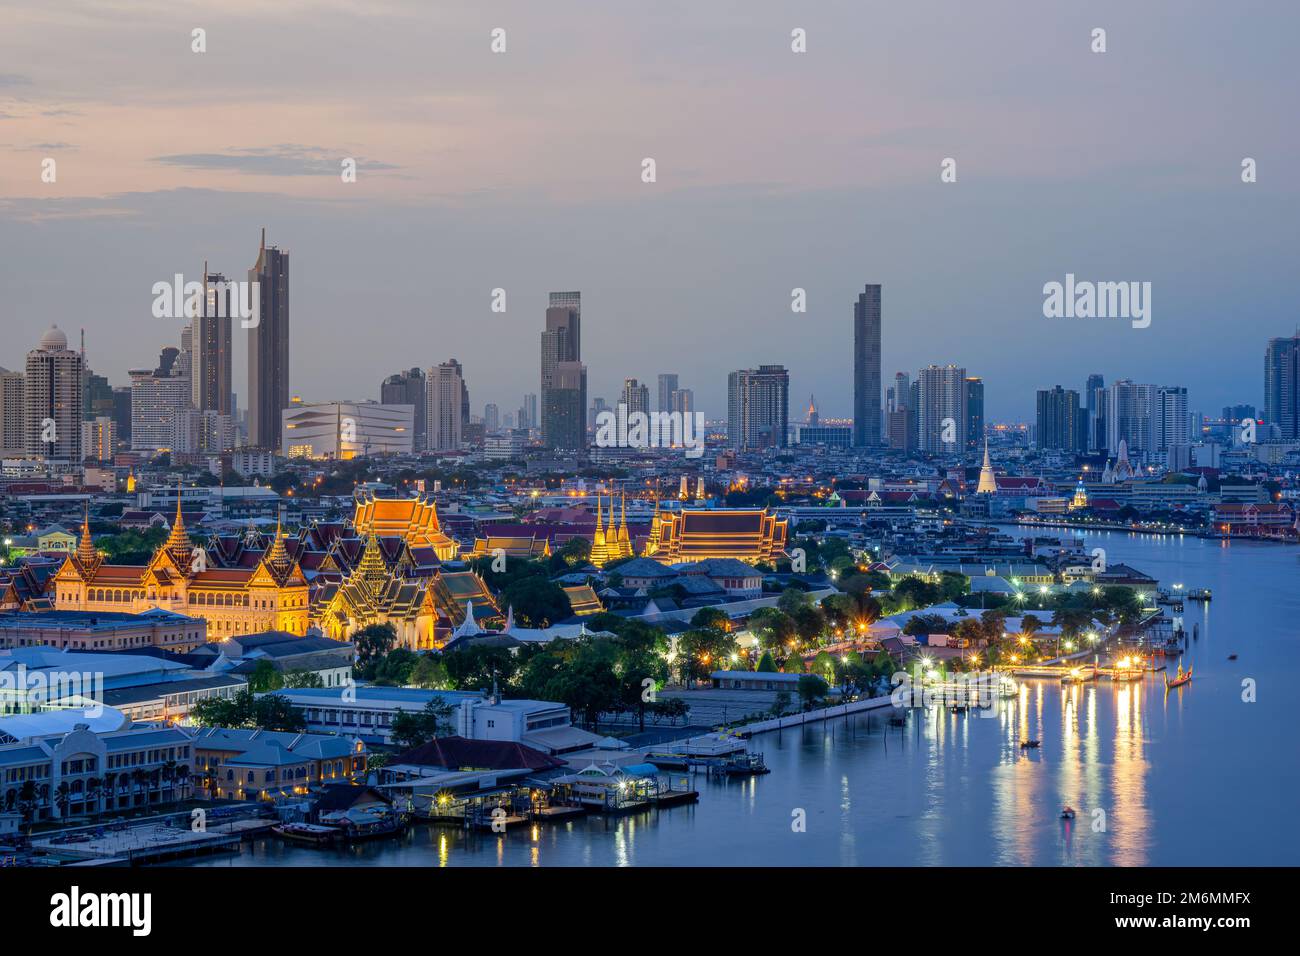 Grand Palace Capital city of Thailand With the Chao Phraya River Surrounding Rattanakosin Island Stock Photo